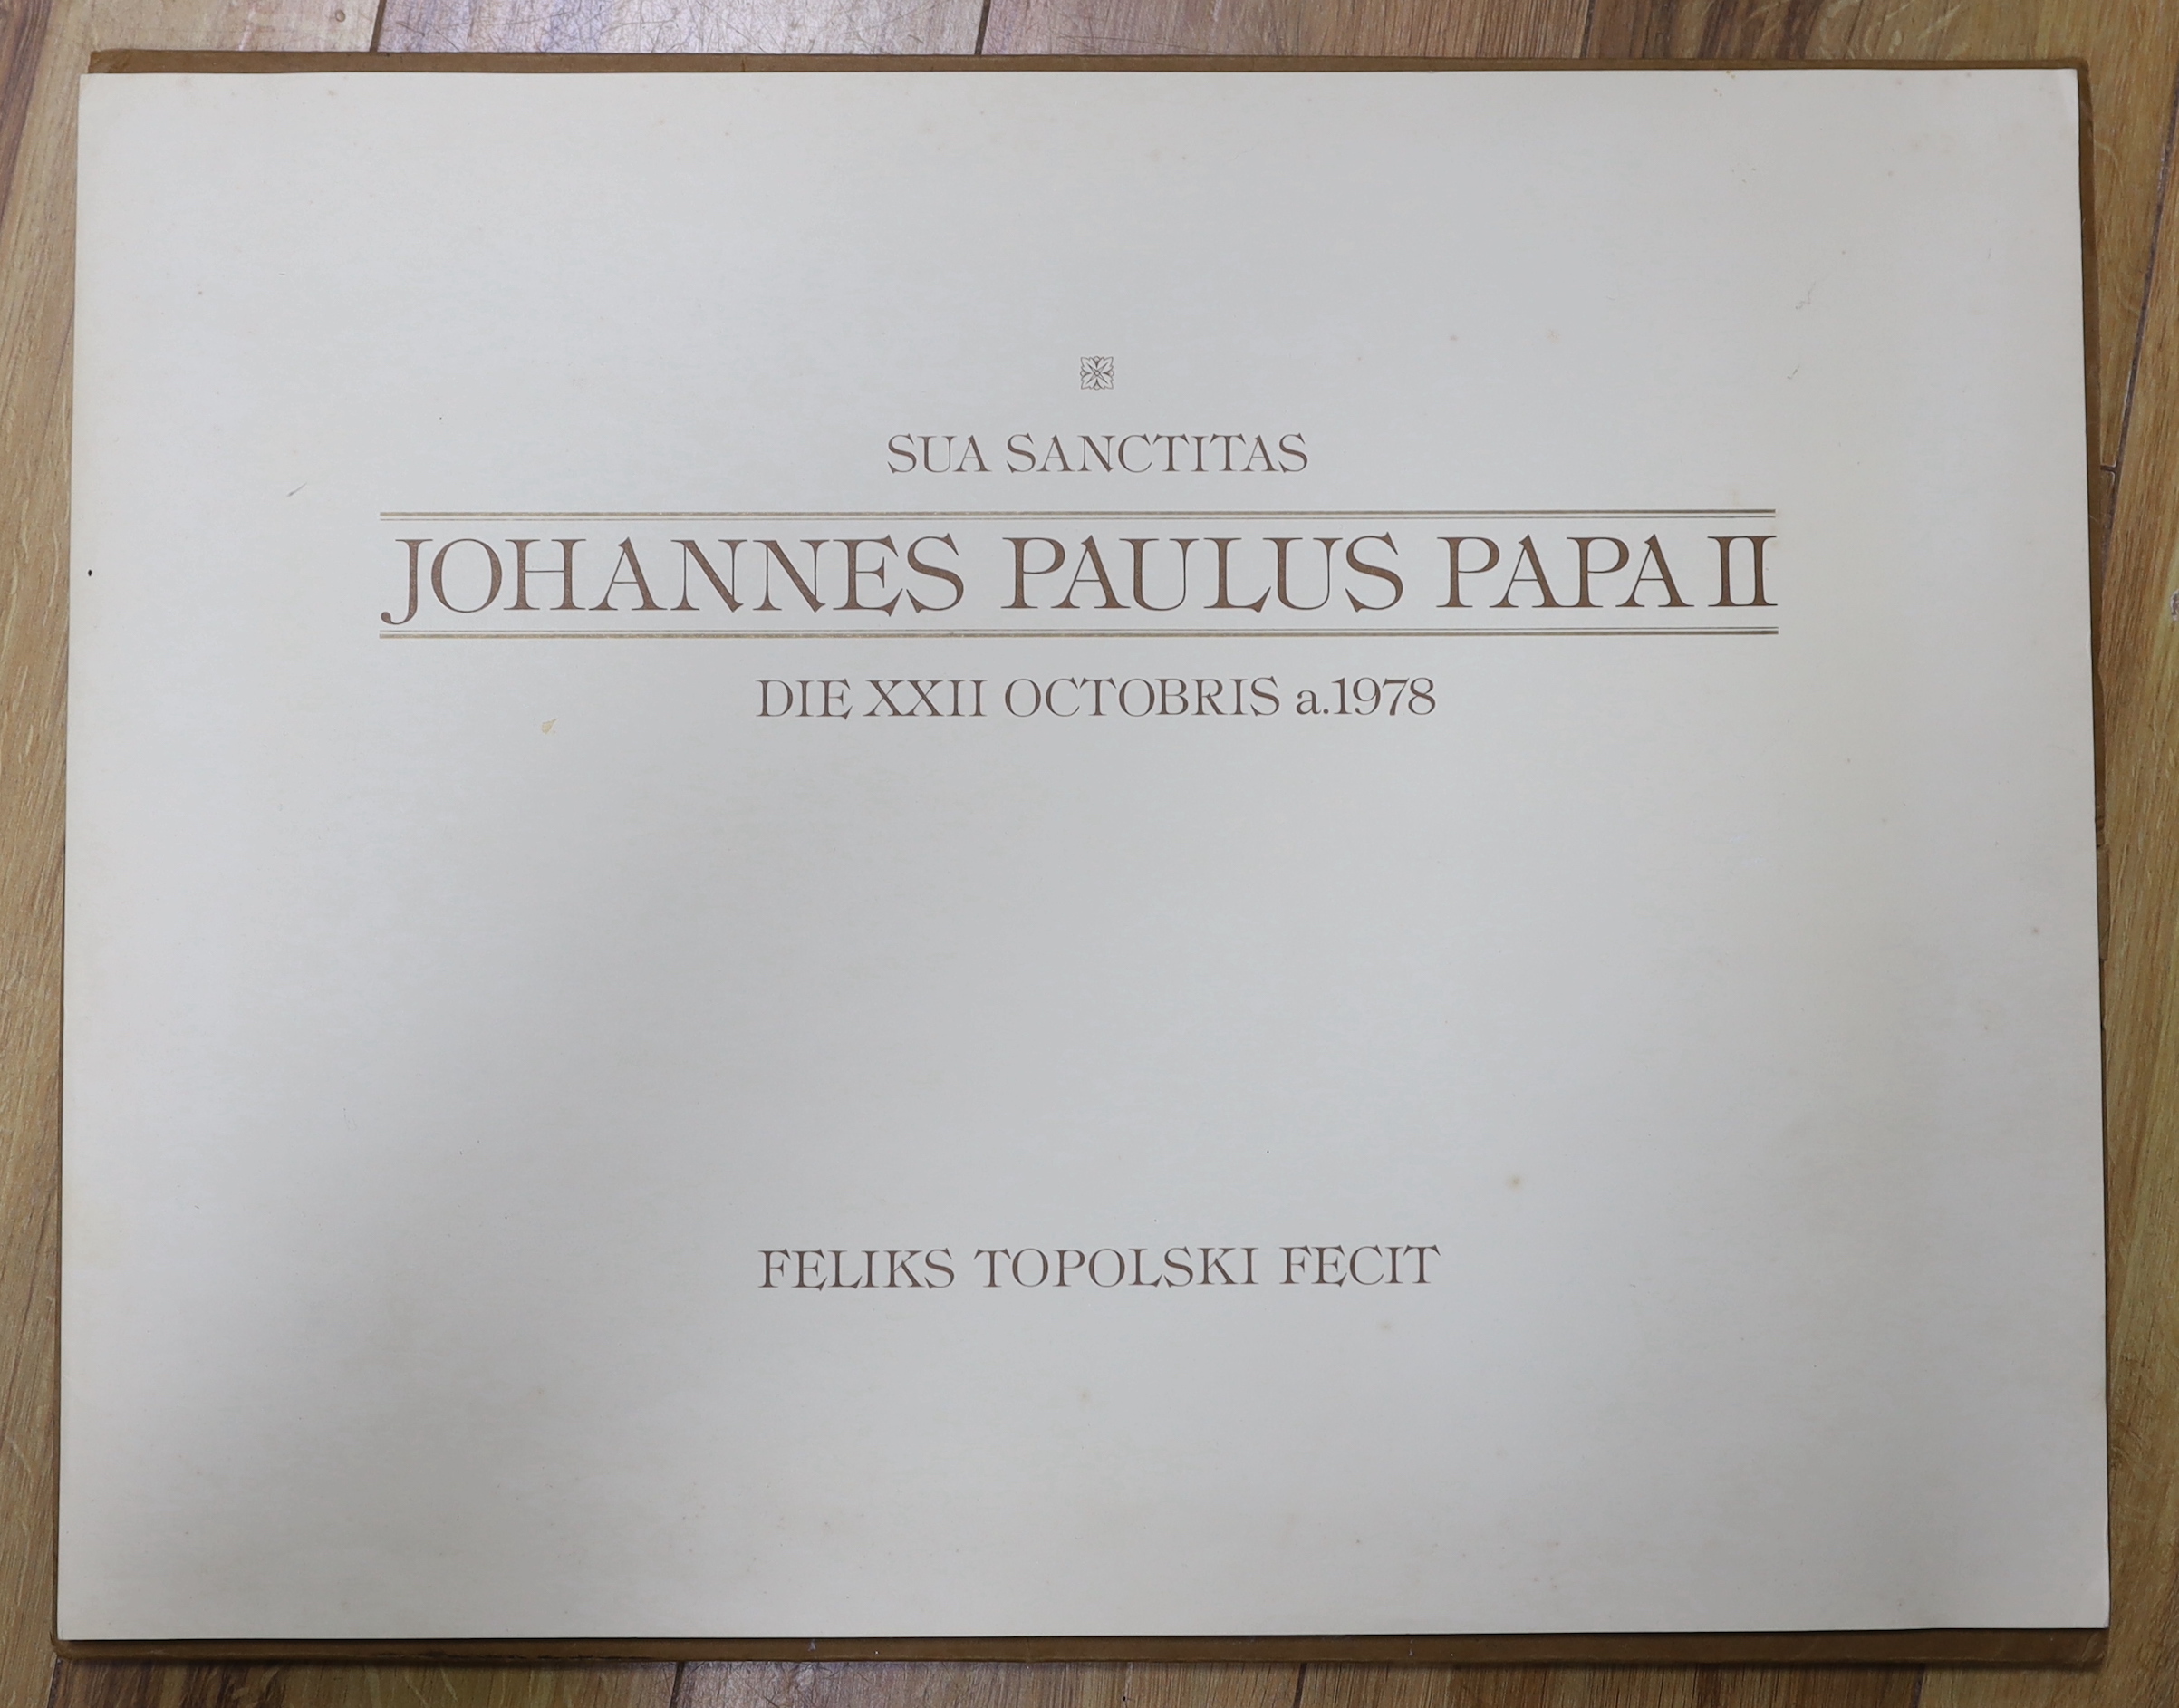 Feliks Topolski (Polish, 1907-1989), folio of colour prints commemorating The Inauguration of His Holiness Pope John Paul II, 1978, limited edition 148/850, signed in pencil, 40 x 52cm